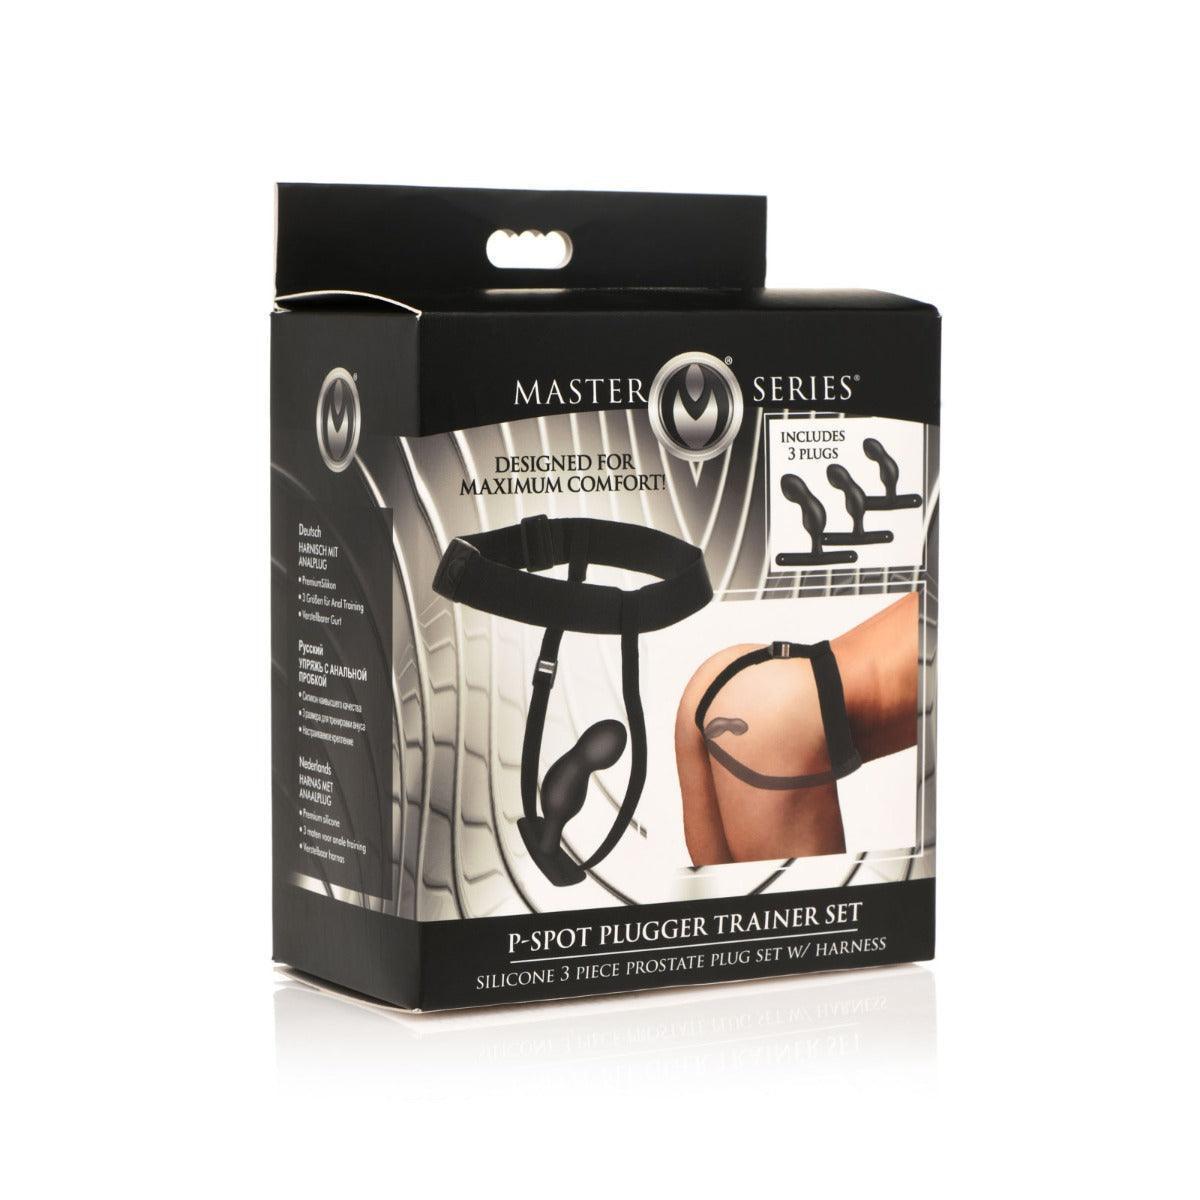 Master Series P-Spot Plugger Trainer Set Silicone 3 Piece Prostate Plug Set w/ Harness